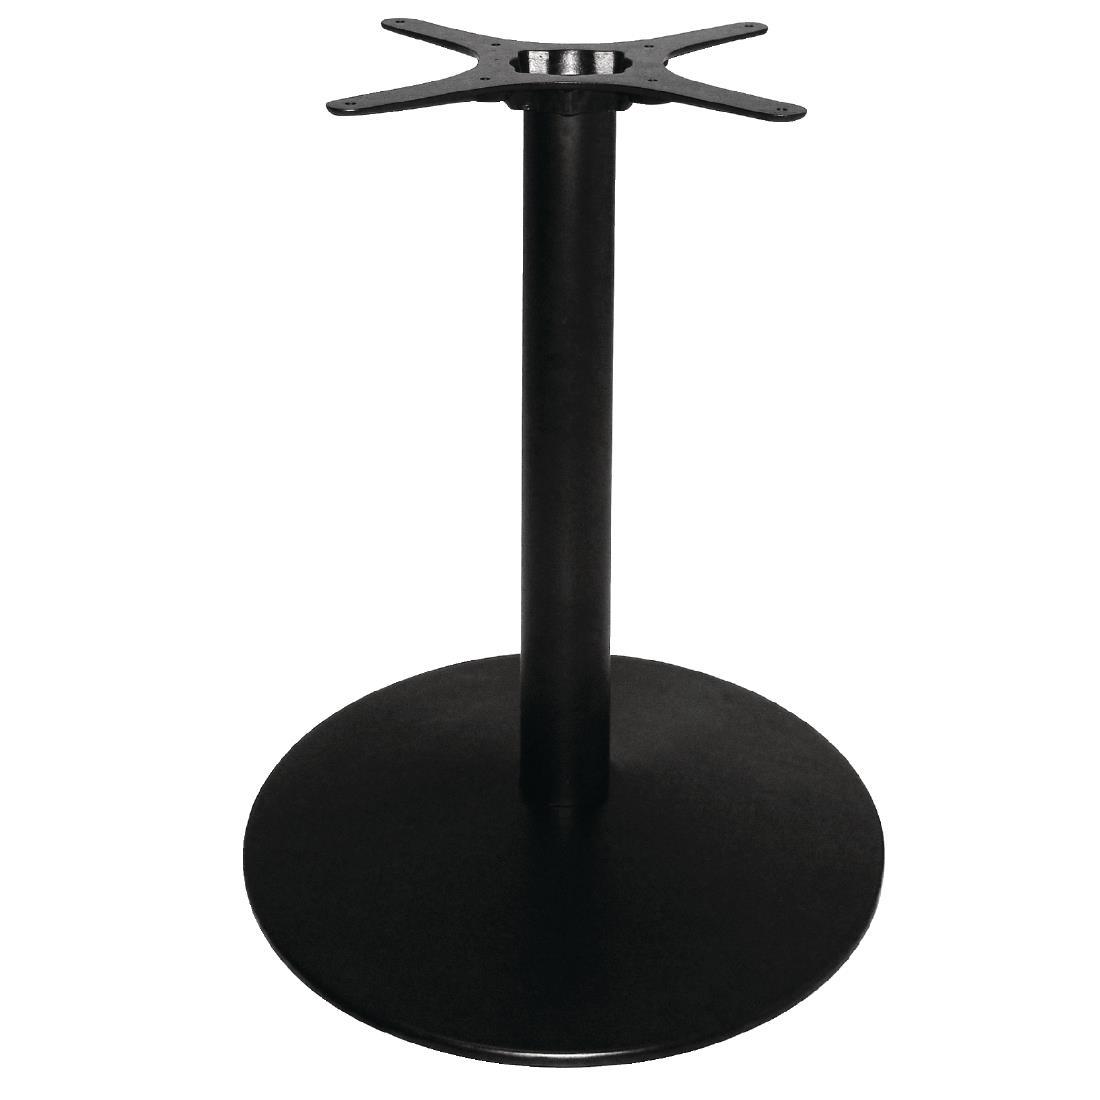 Bolero Cast Iron Table Base - DL475  - 1